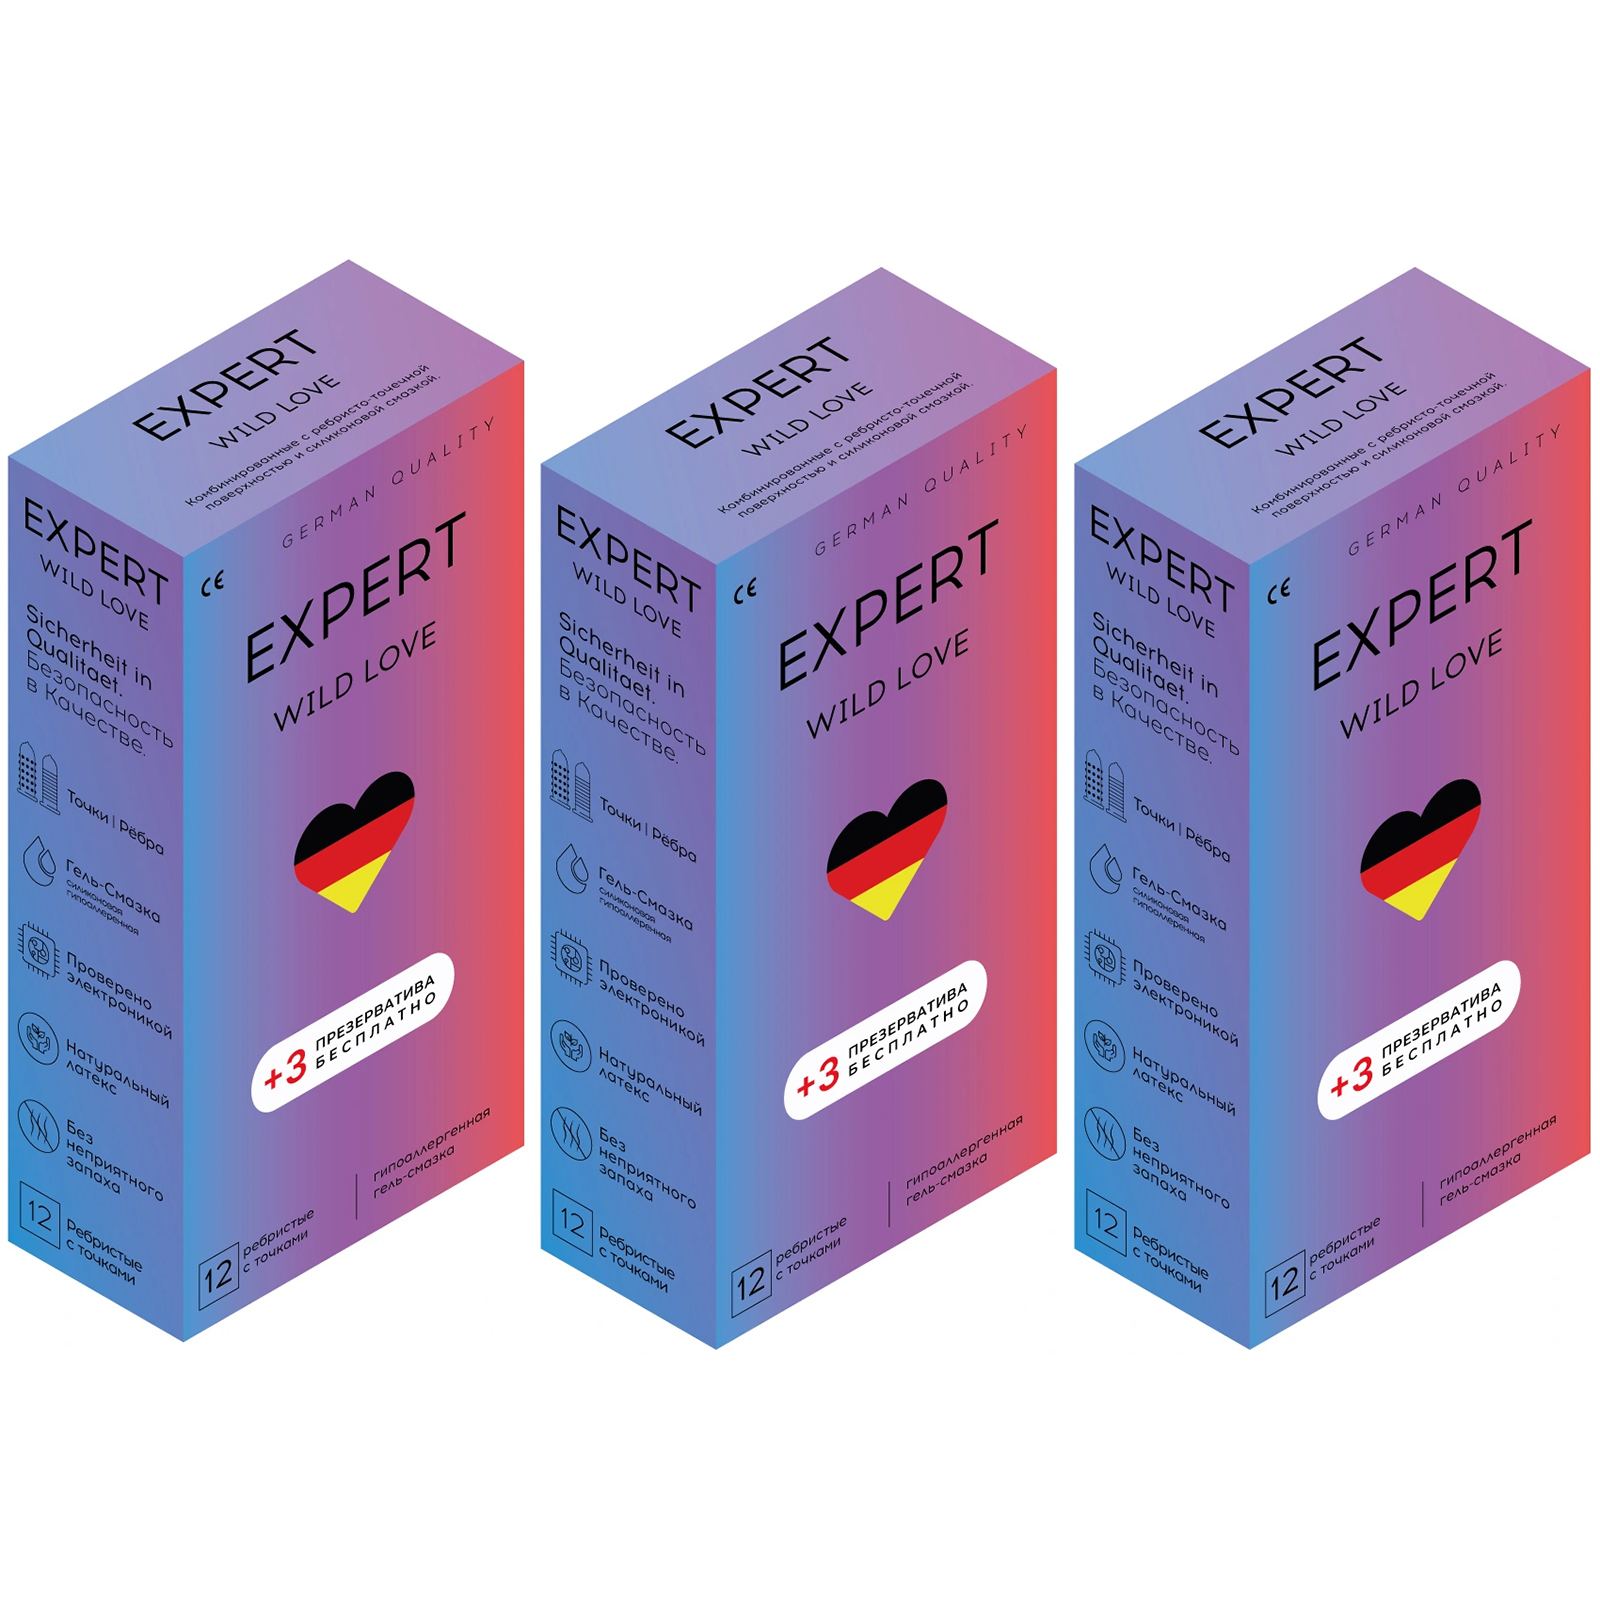 Купить Презервативы EXPERT Wild Love Germany ребристые с точками 45 шт.